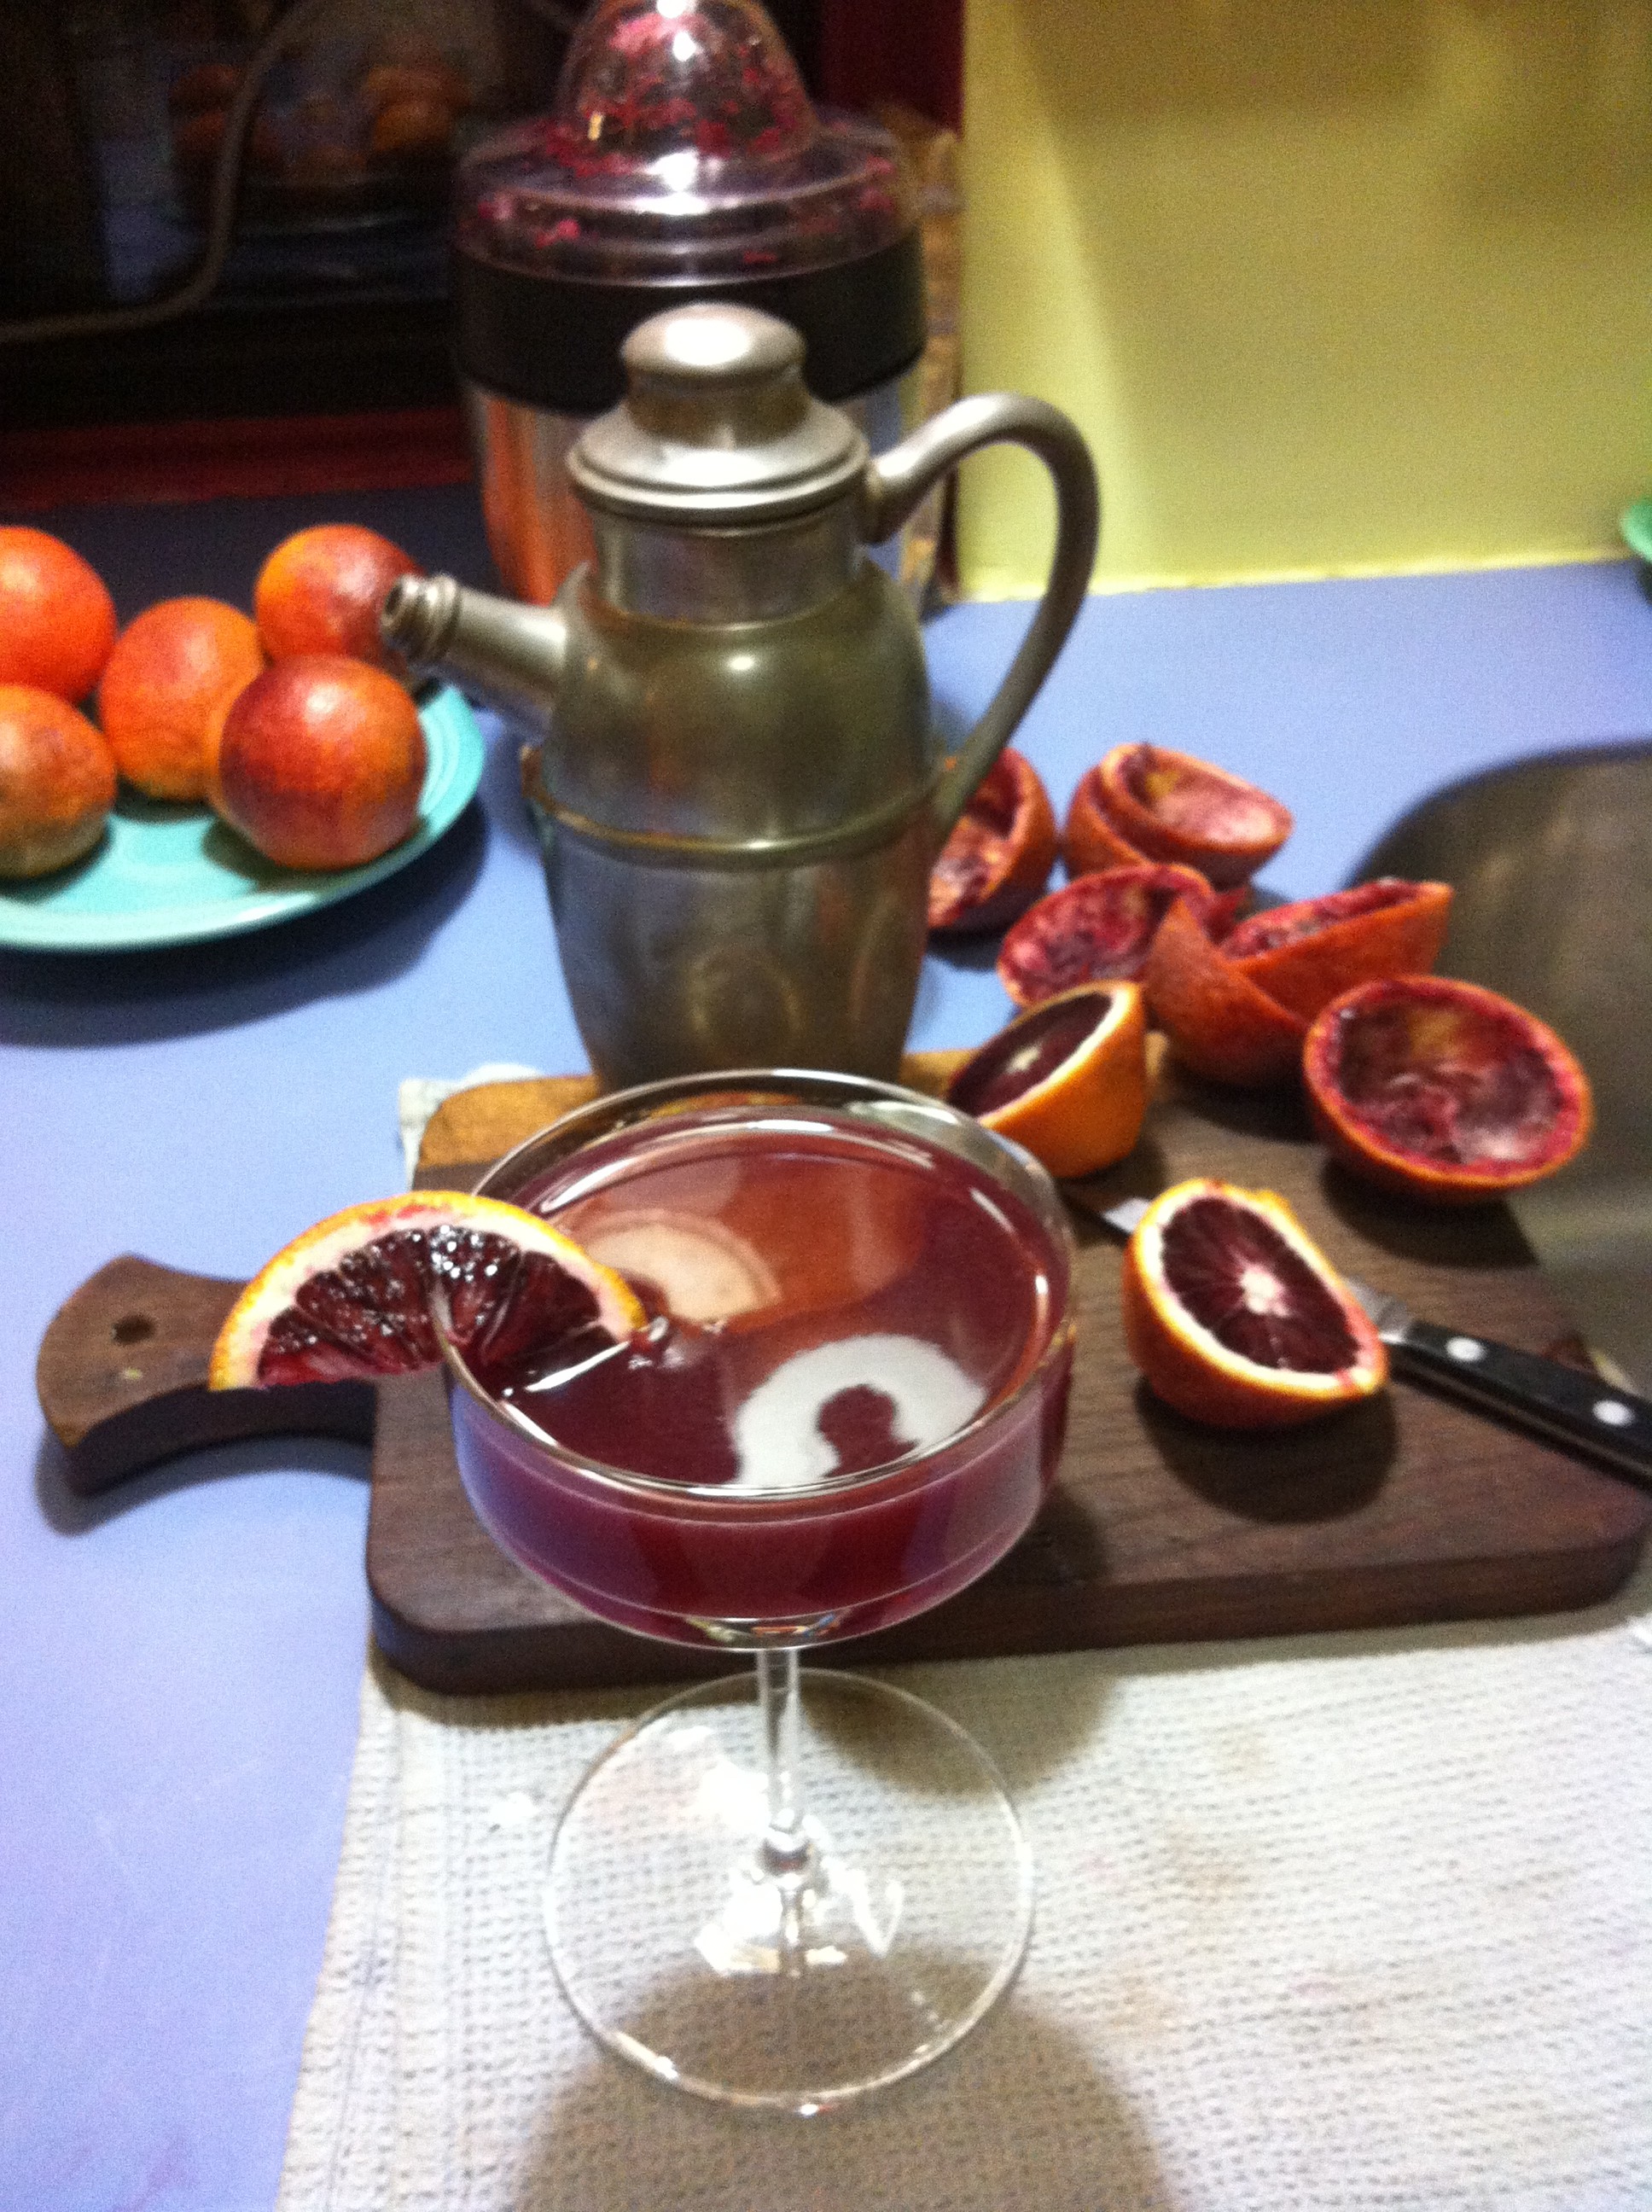 Blood Orange Cocktail